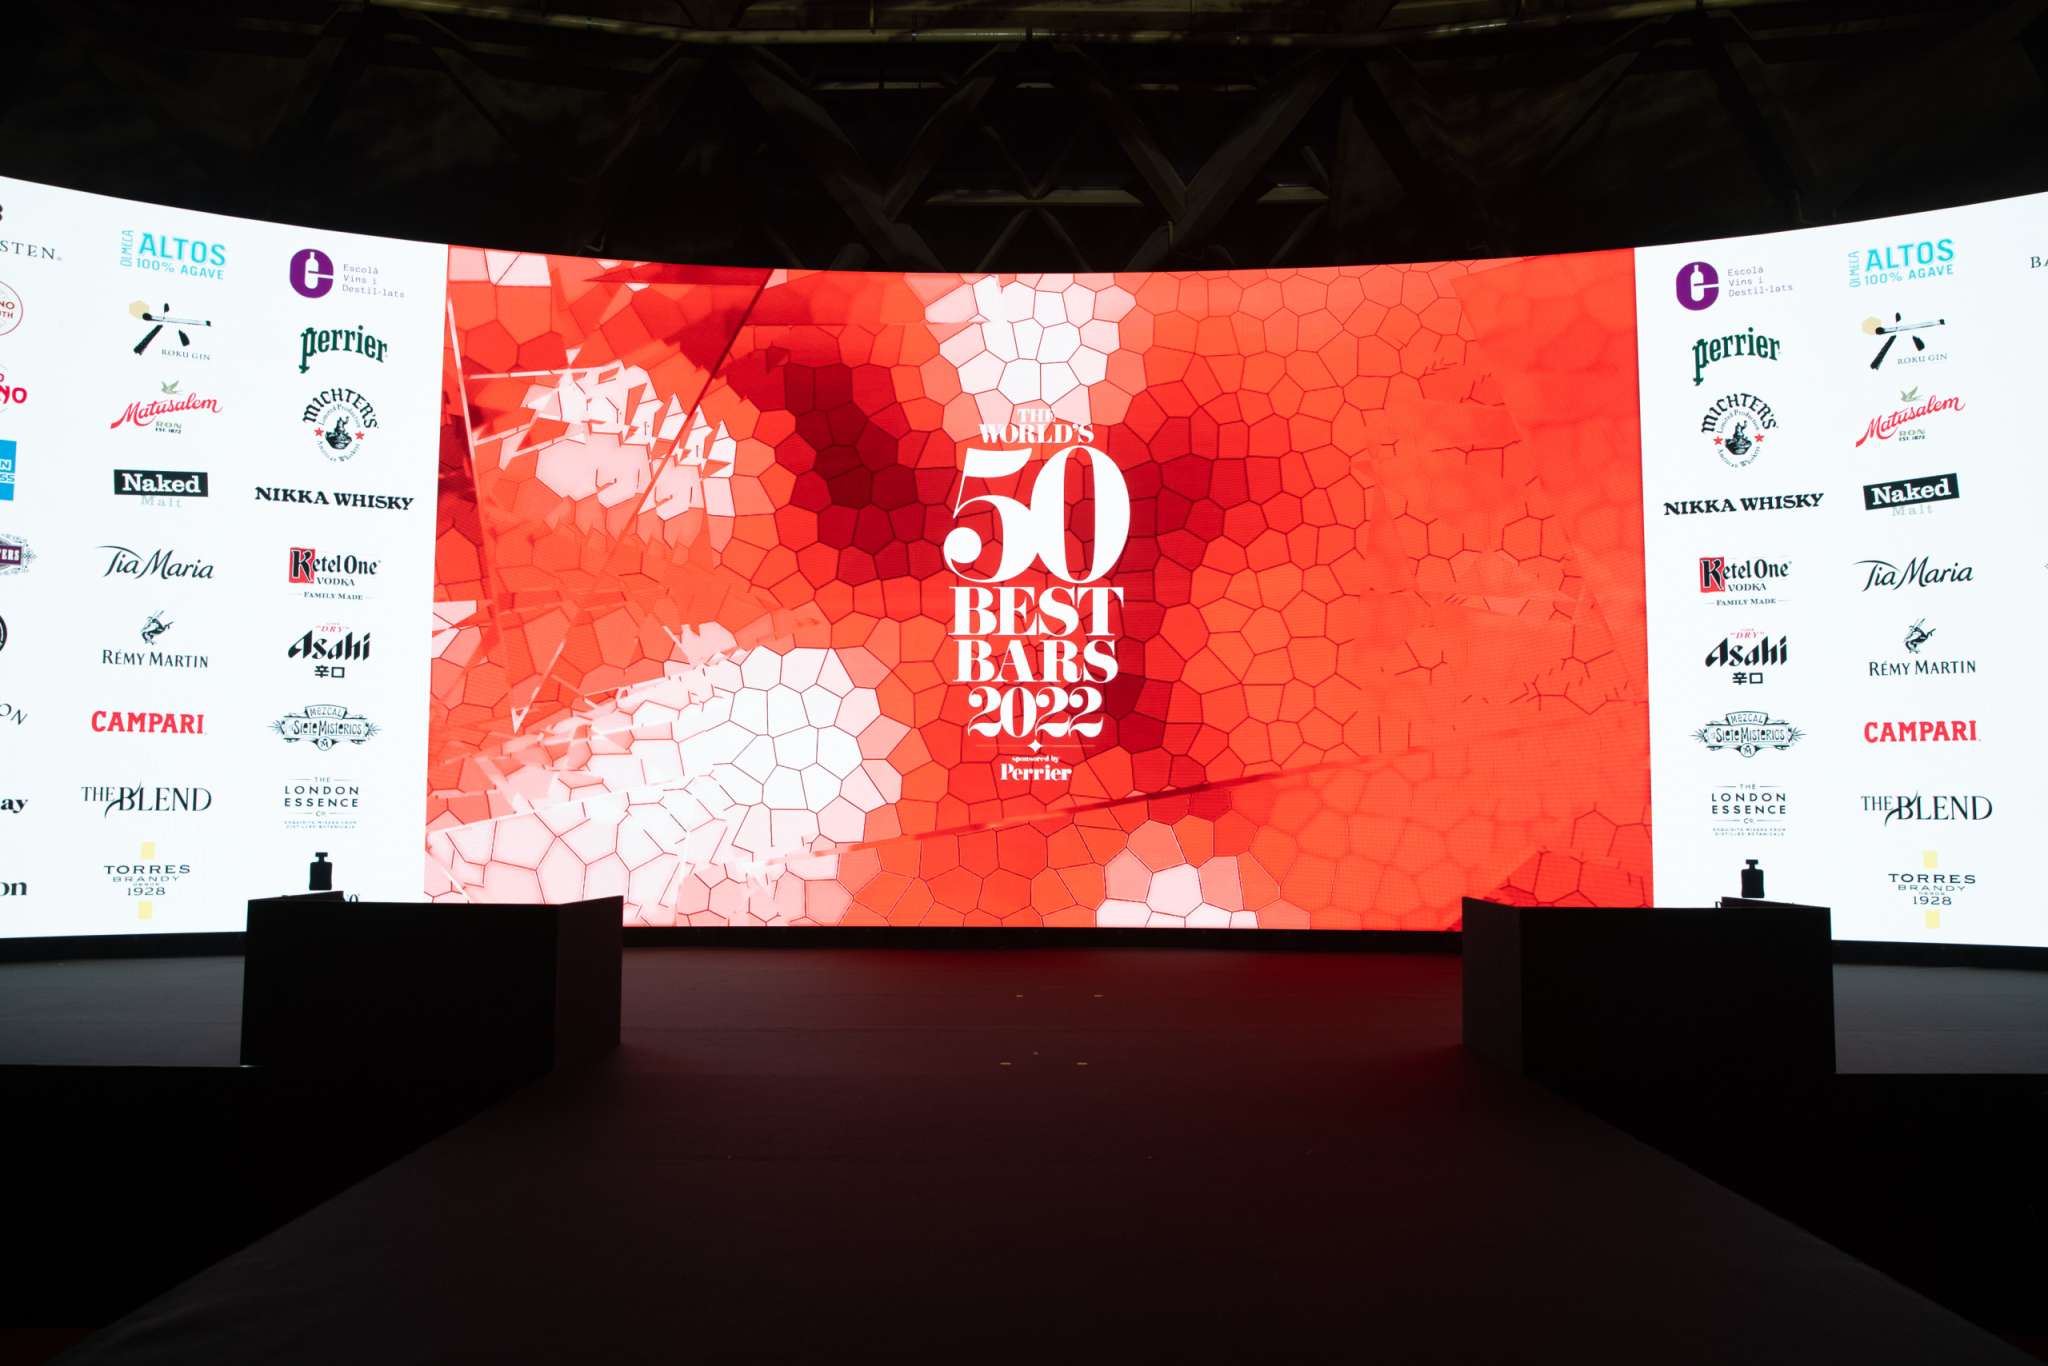 The world's 50 best bars awards ceremony 2022.